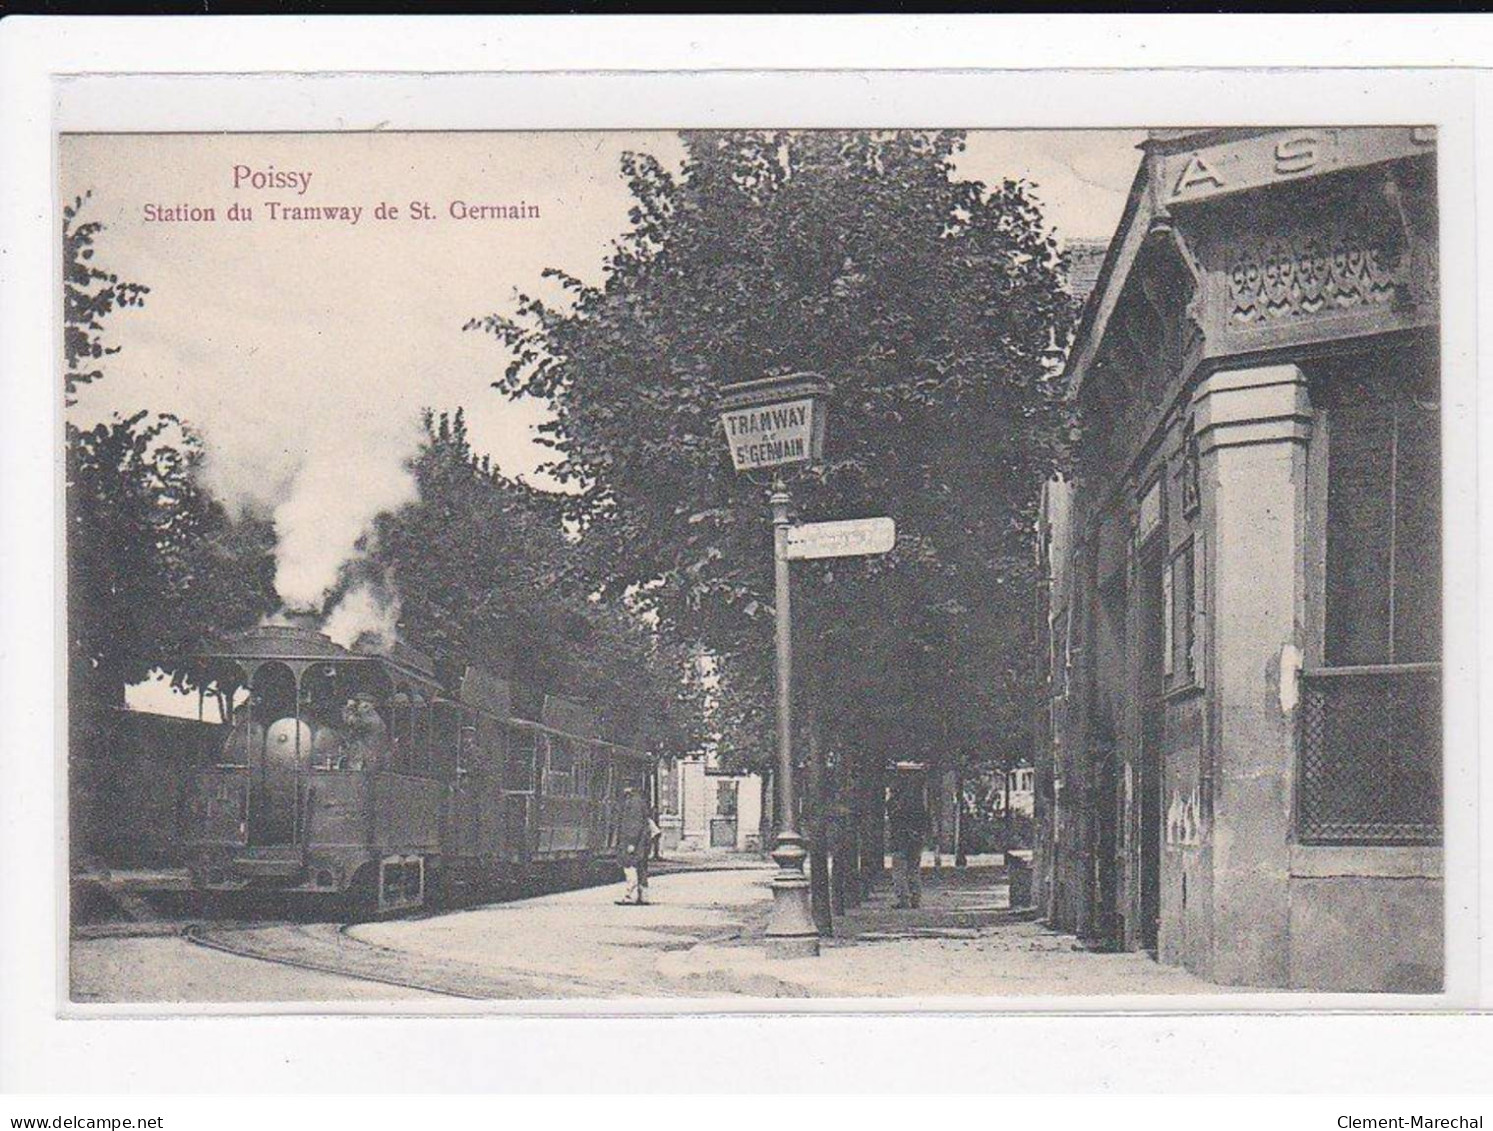 POISSY : Station Du Tramway De St-Germain - état - Poissy